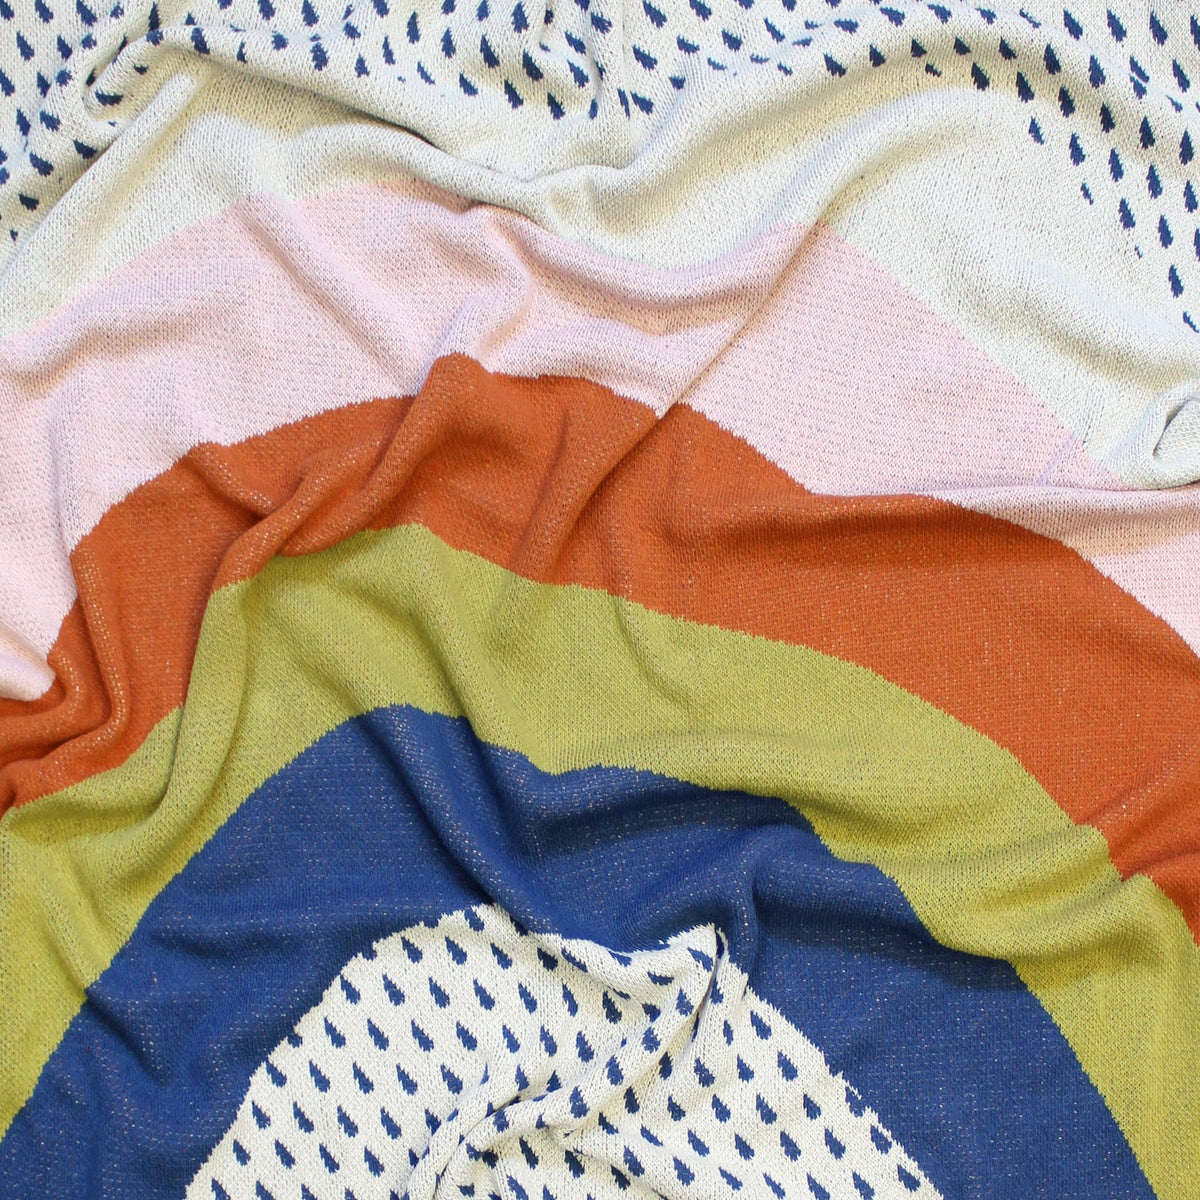 Rainbow Throw Blanket